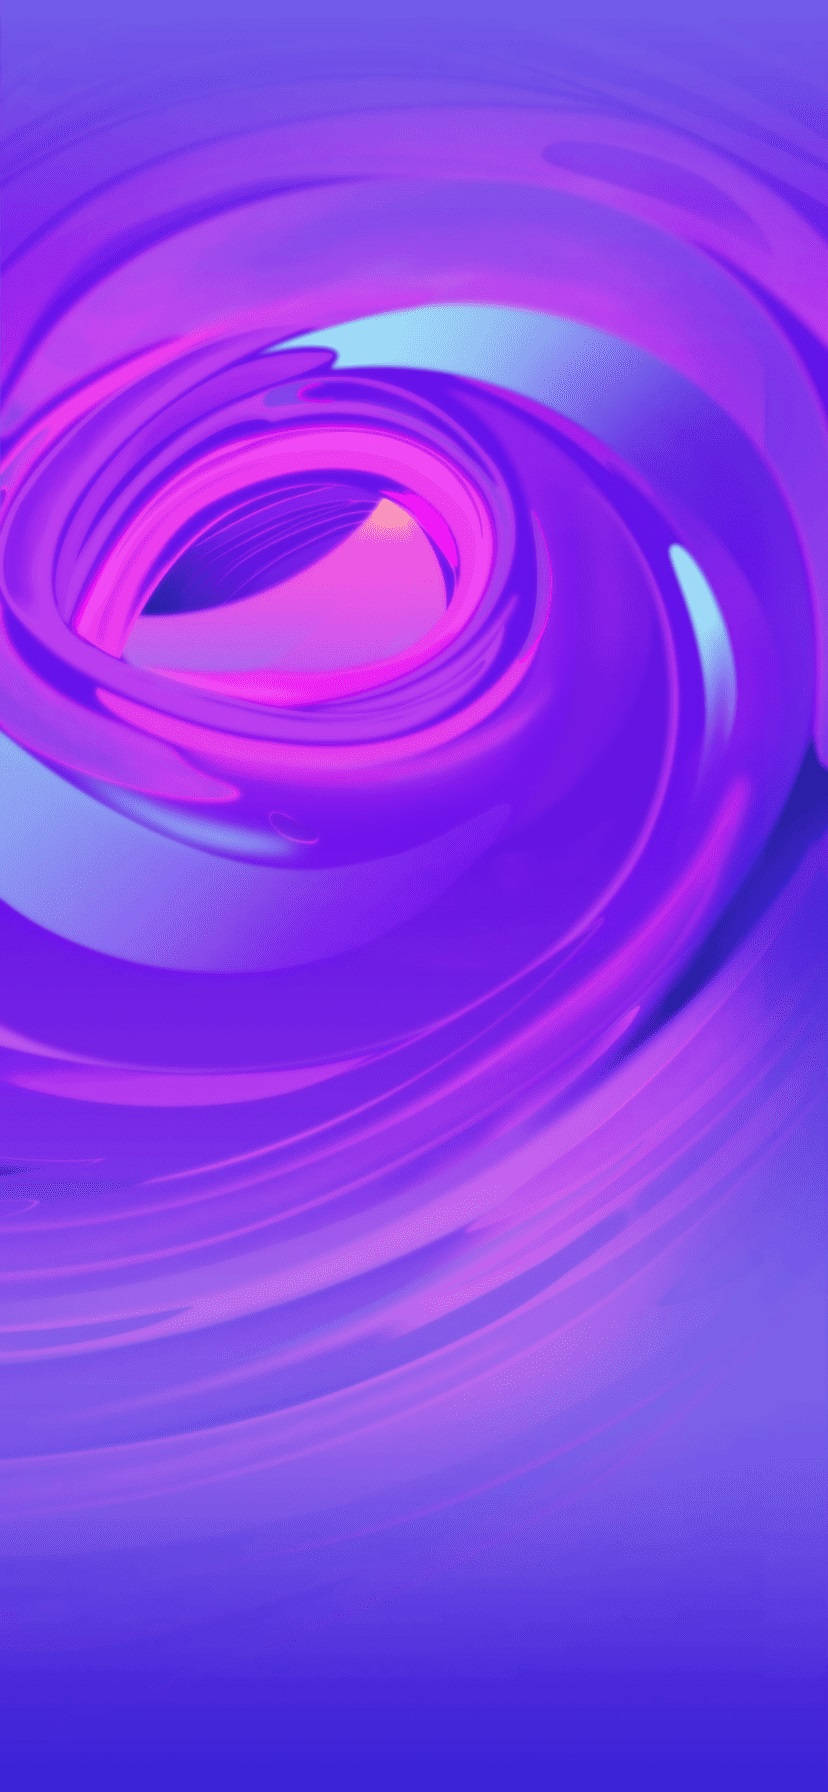 Aesthetic Purple Swirl For IPhone Wallpaper